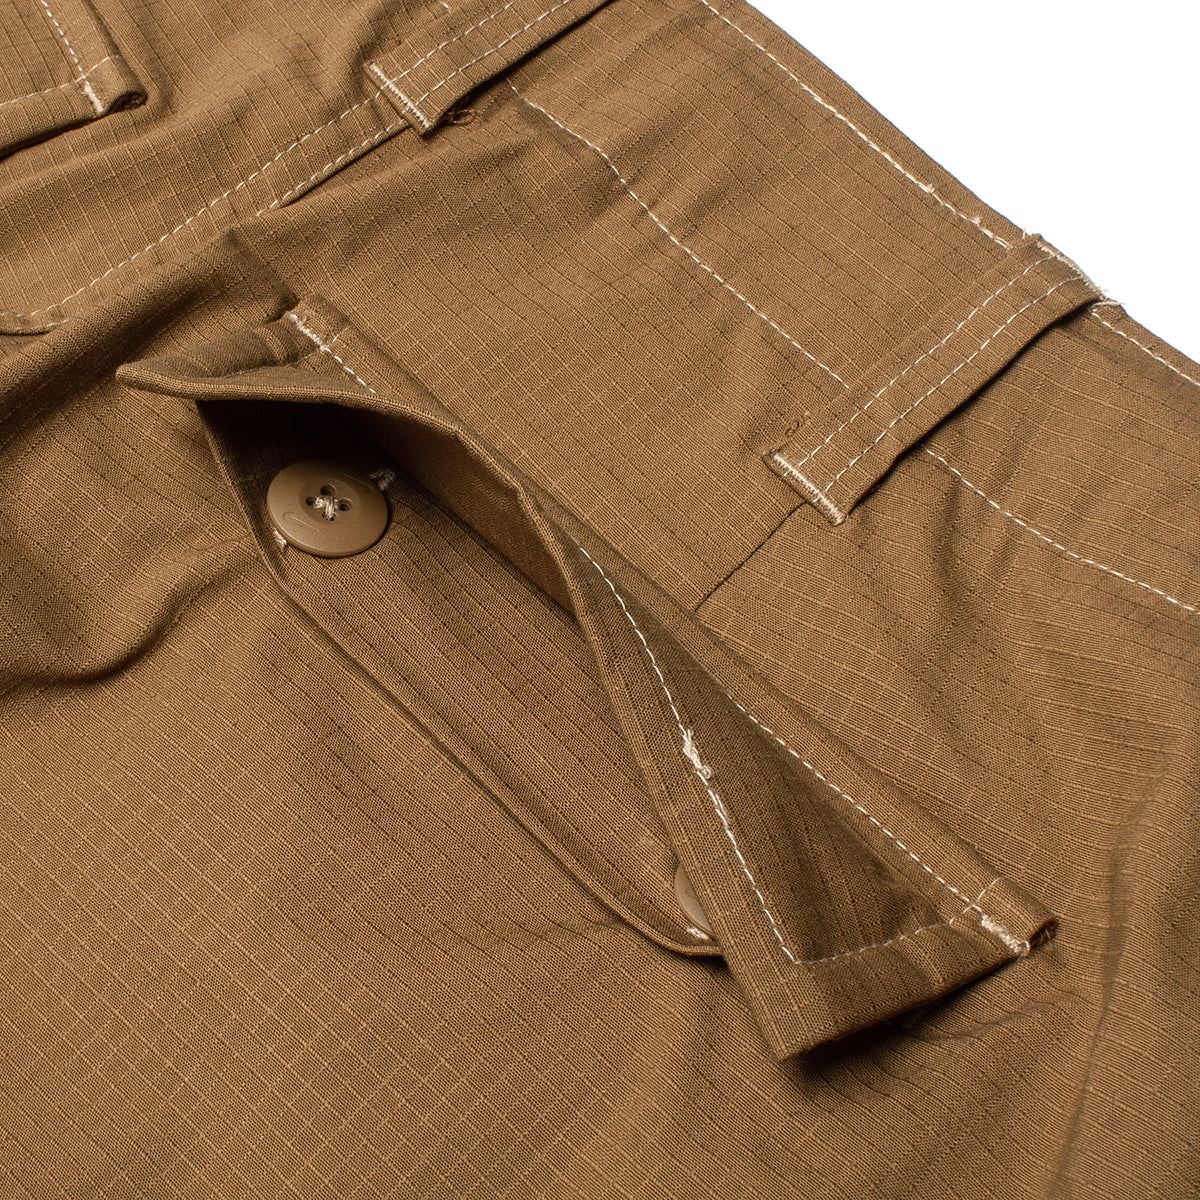 Nike SB | Kearny Cargo Pant Style # FD0401-270 Color : Ale Brown